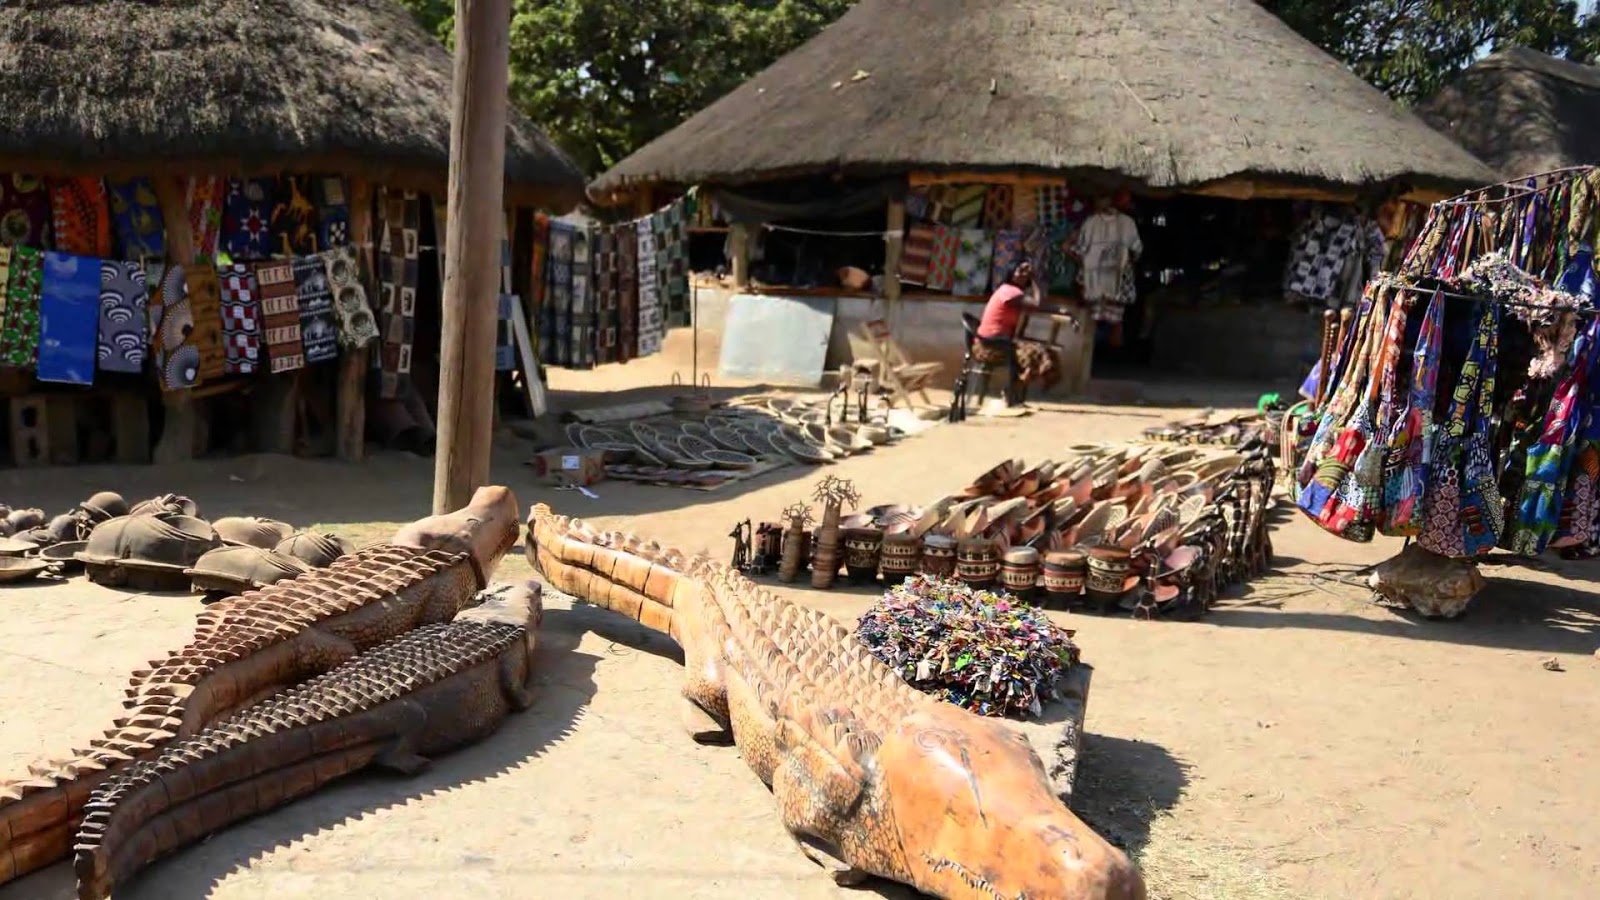 Kabwata cultural village in Lusaka